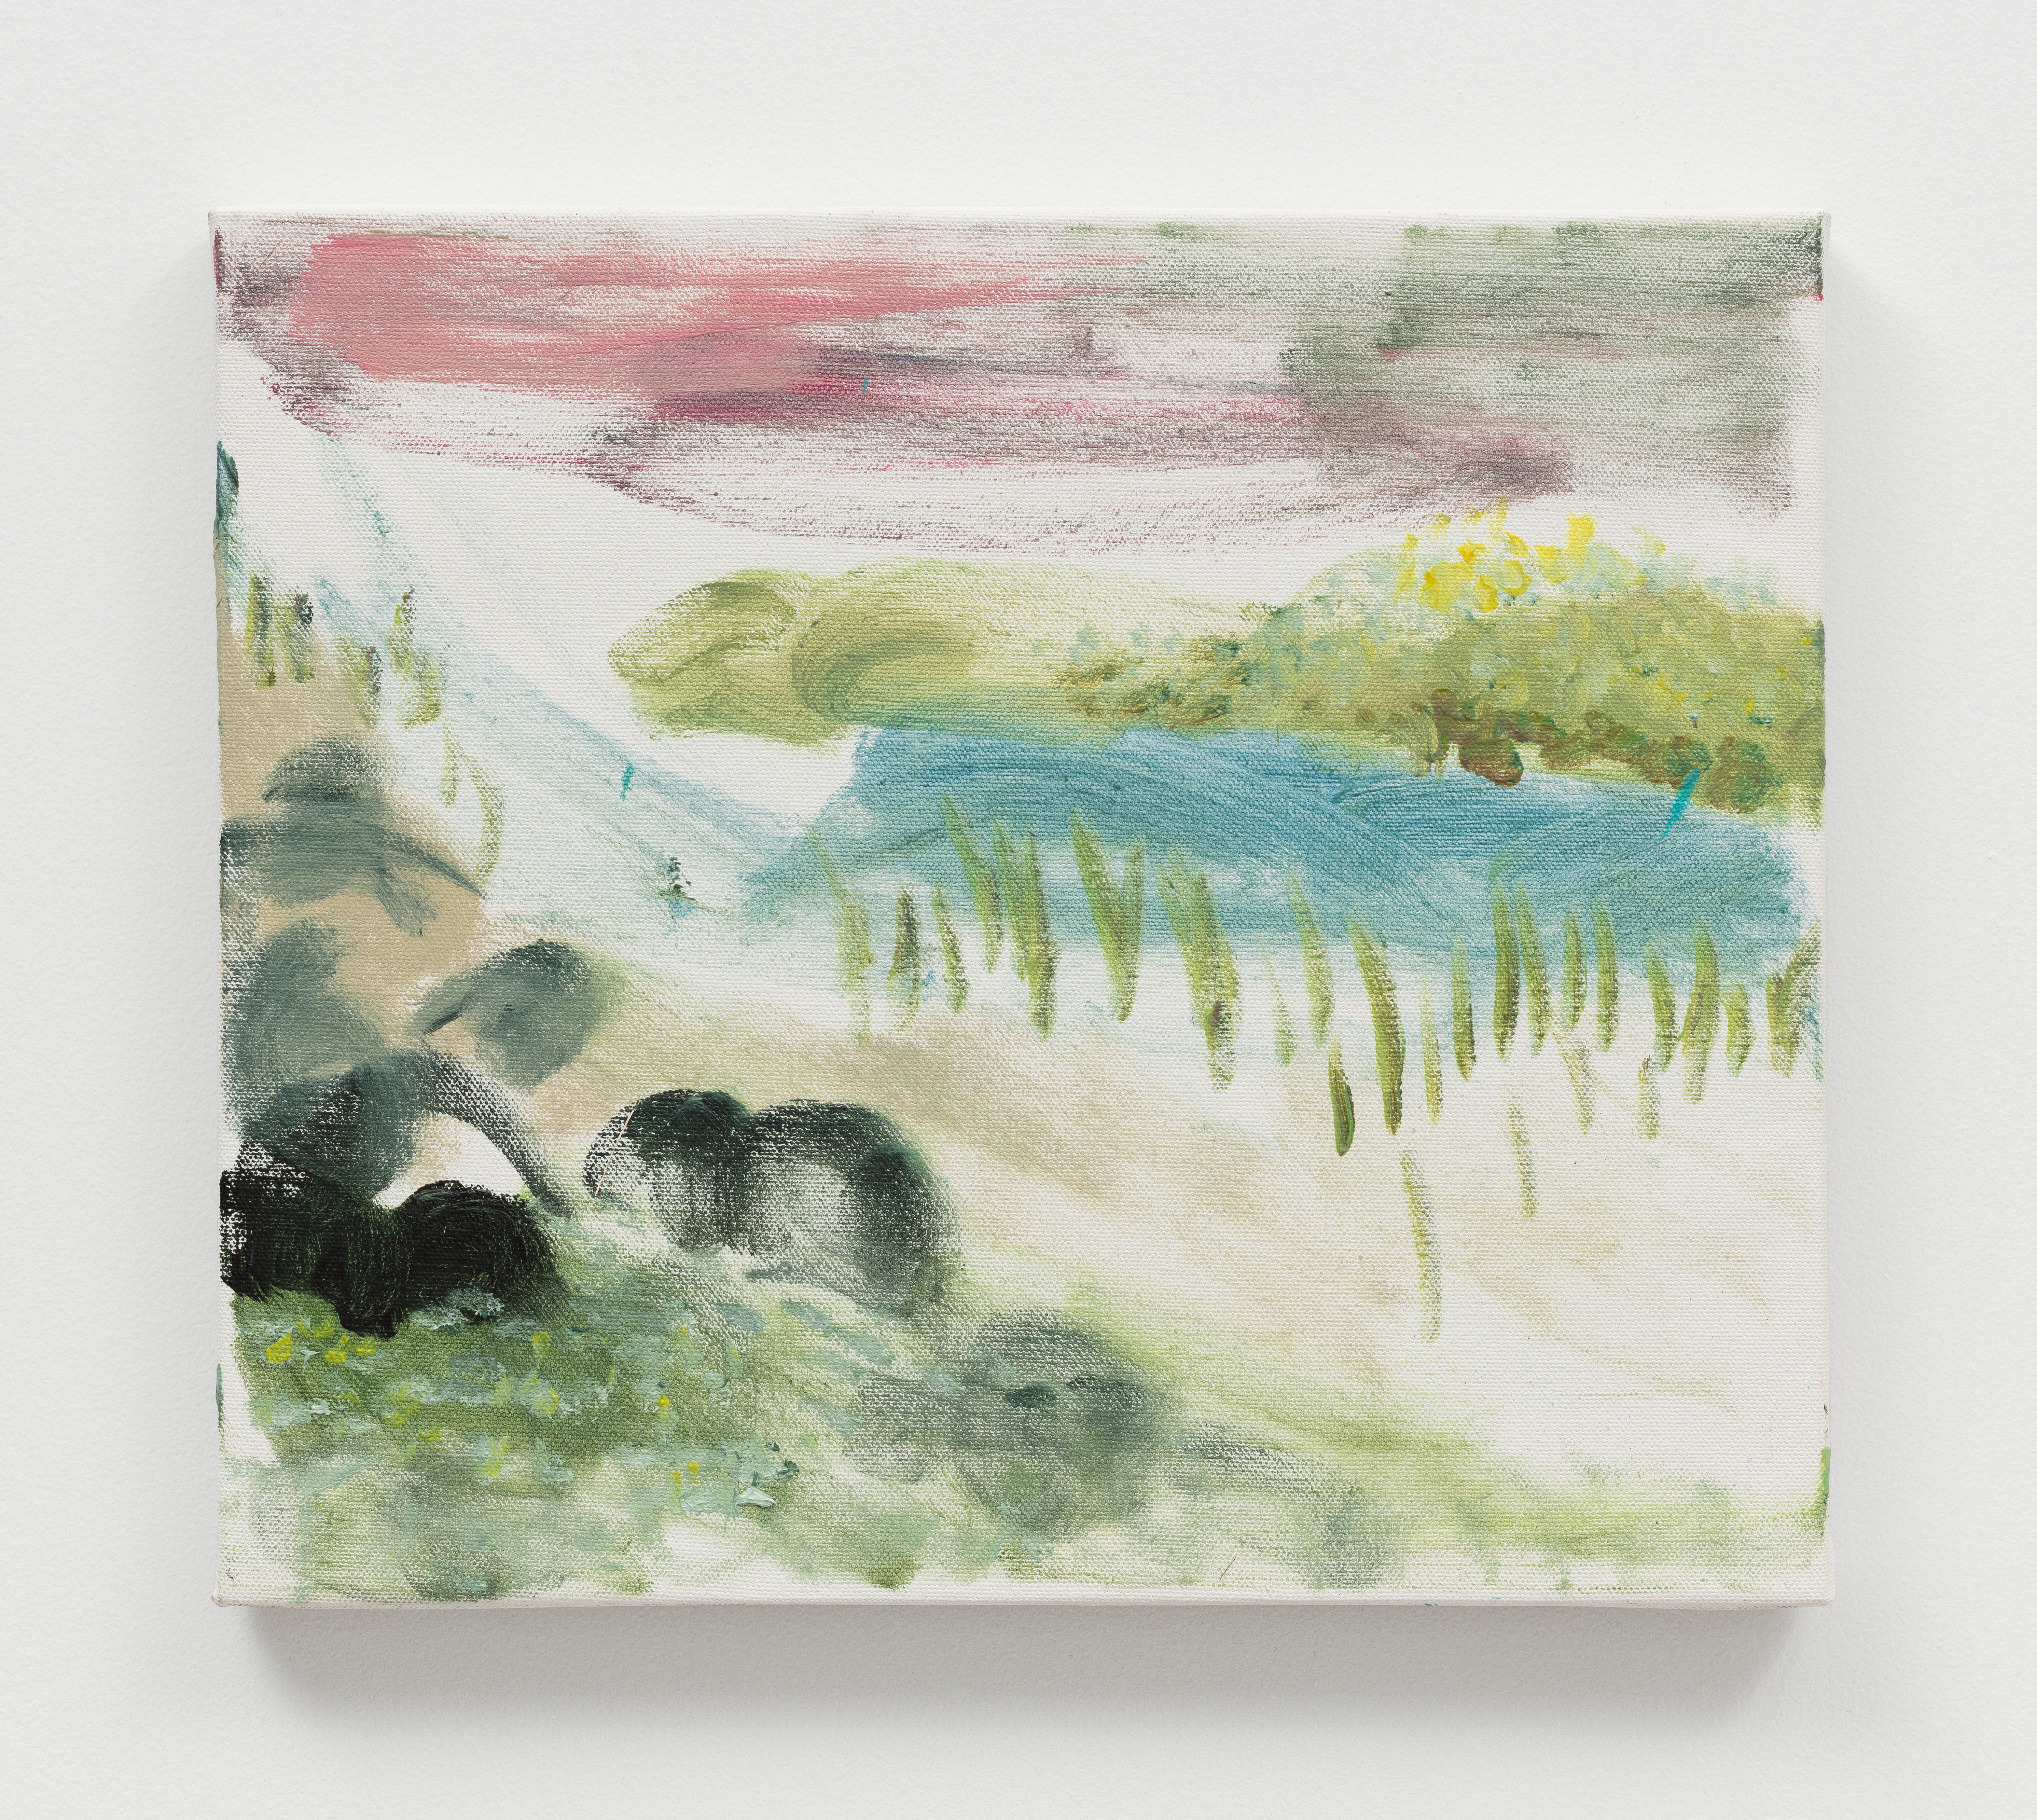 Trevor Shimizu
Field (3), 2019
Oil on canvas
13 x 15 inches
33 x 38.1 cm